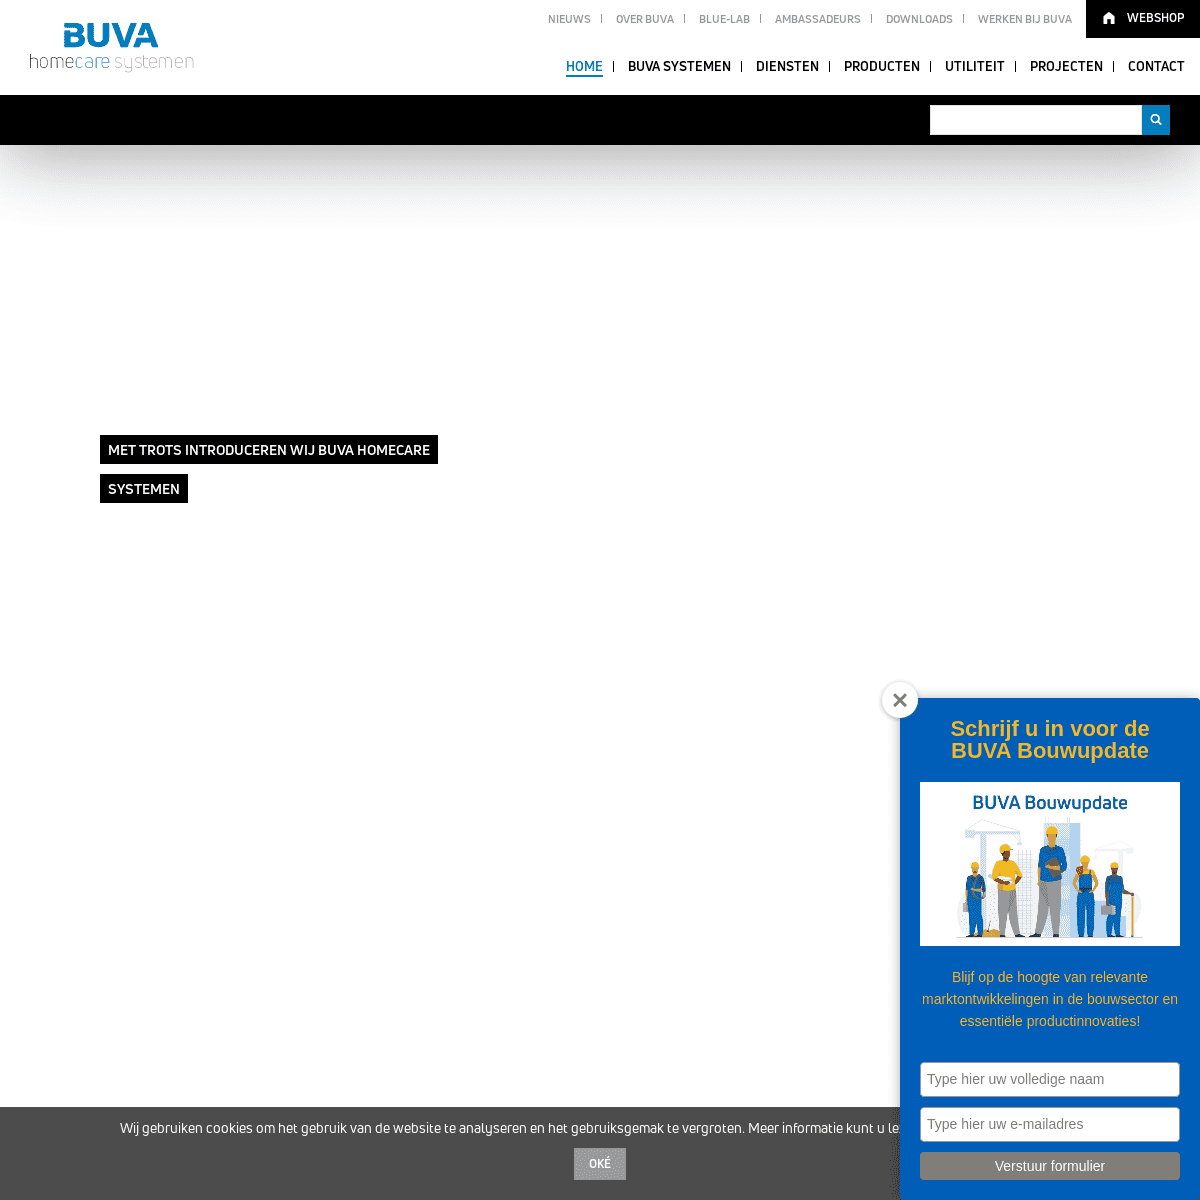 A complete backup of https://buva.nl